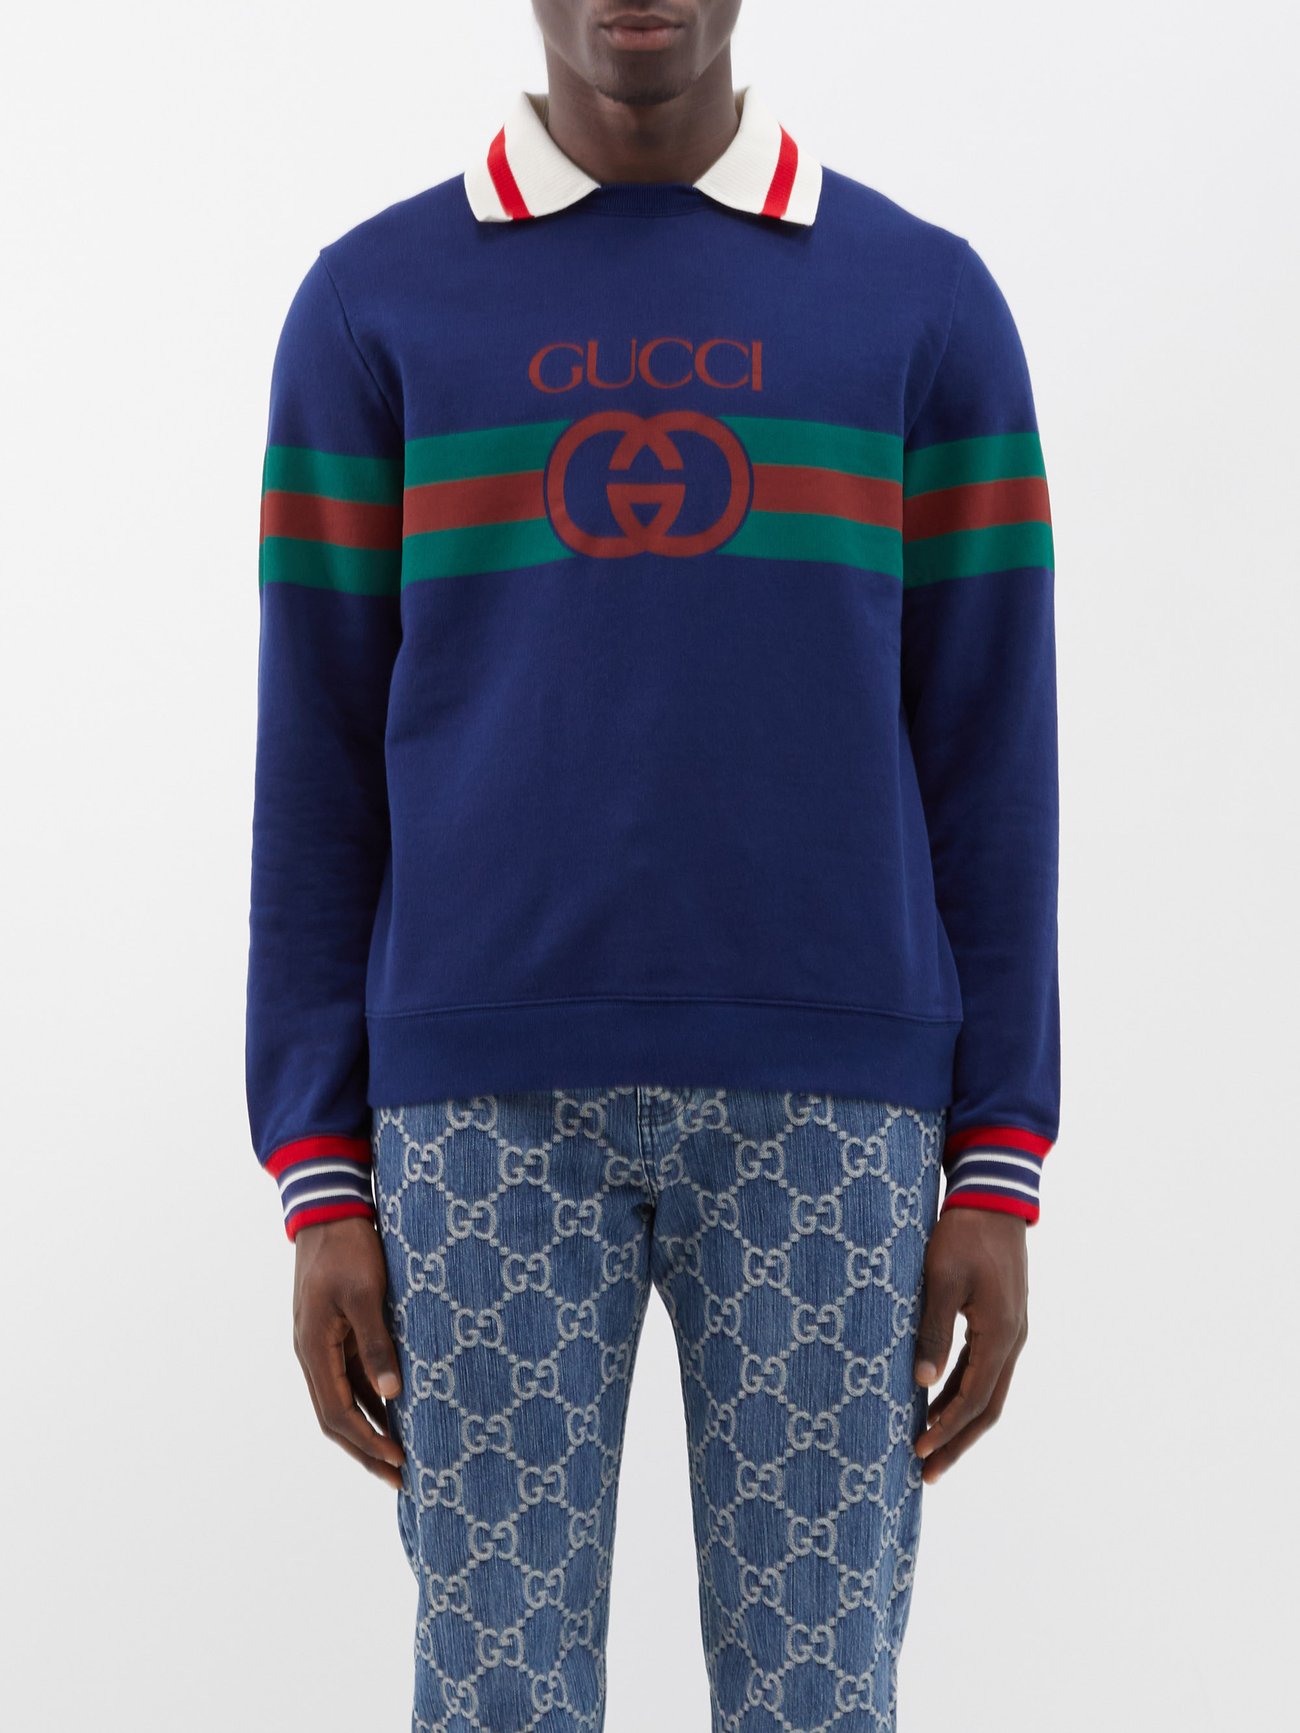 Gucci Navy Blue and White Monogram Jacquard Knit Polo T-Shirt XL Gucci